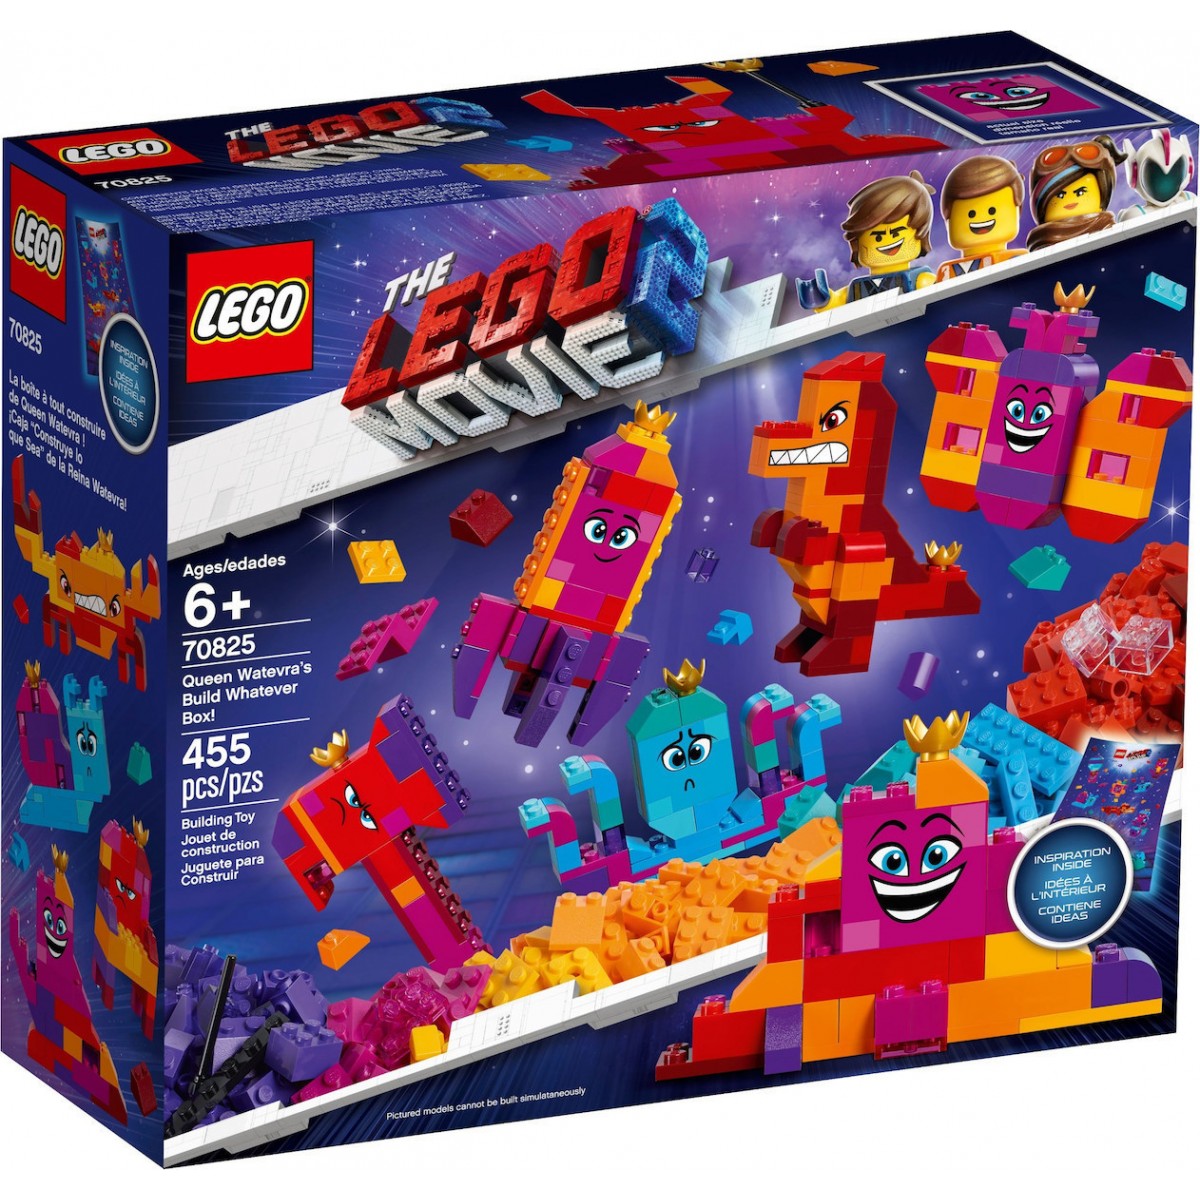 LEGO MOVIE 2 70825 QUEEN MATEVRA'S BUILD WHATEVER BOX